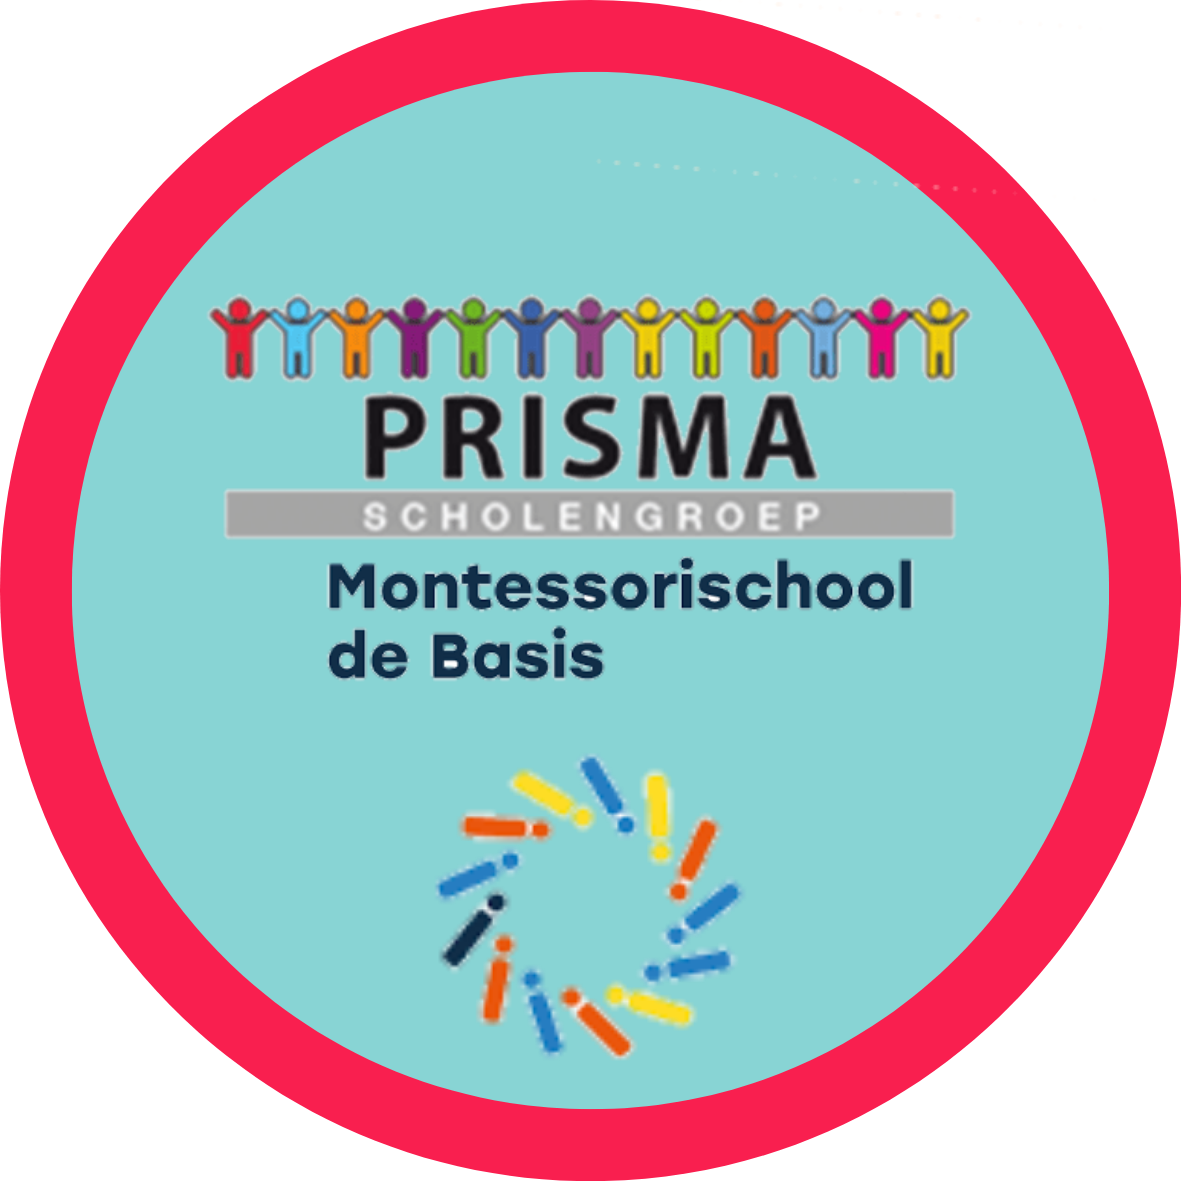 Prisma: Montessori de basis